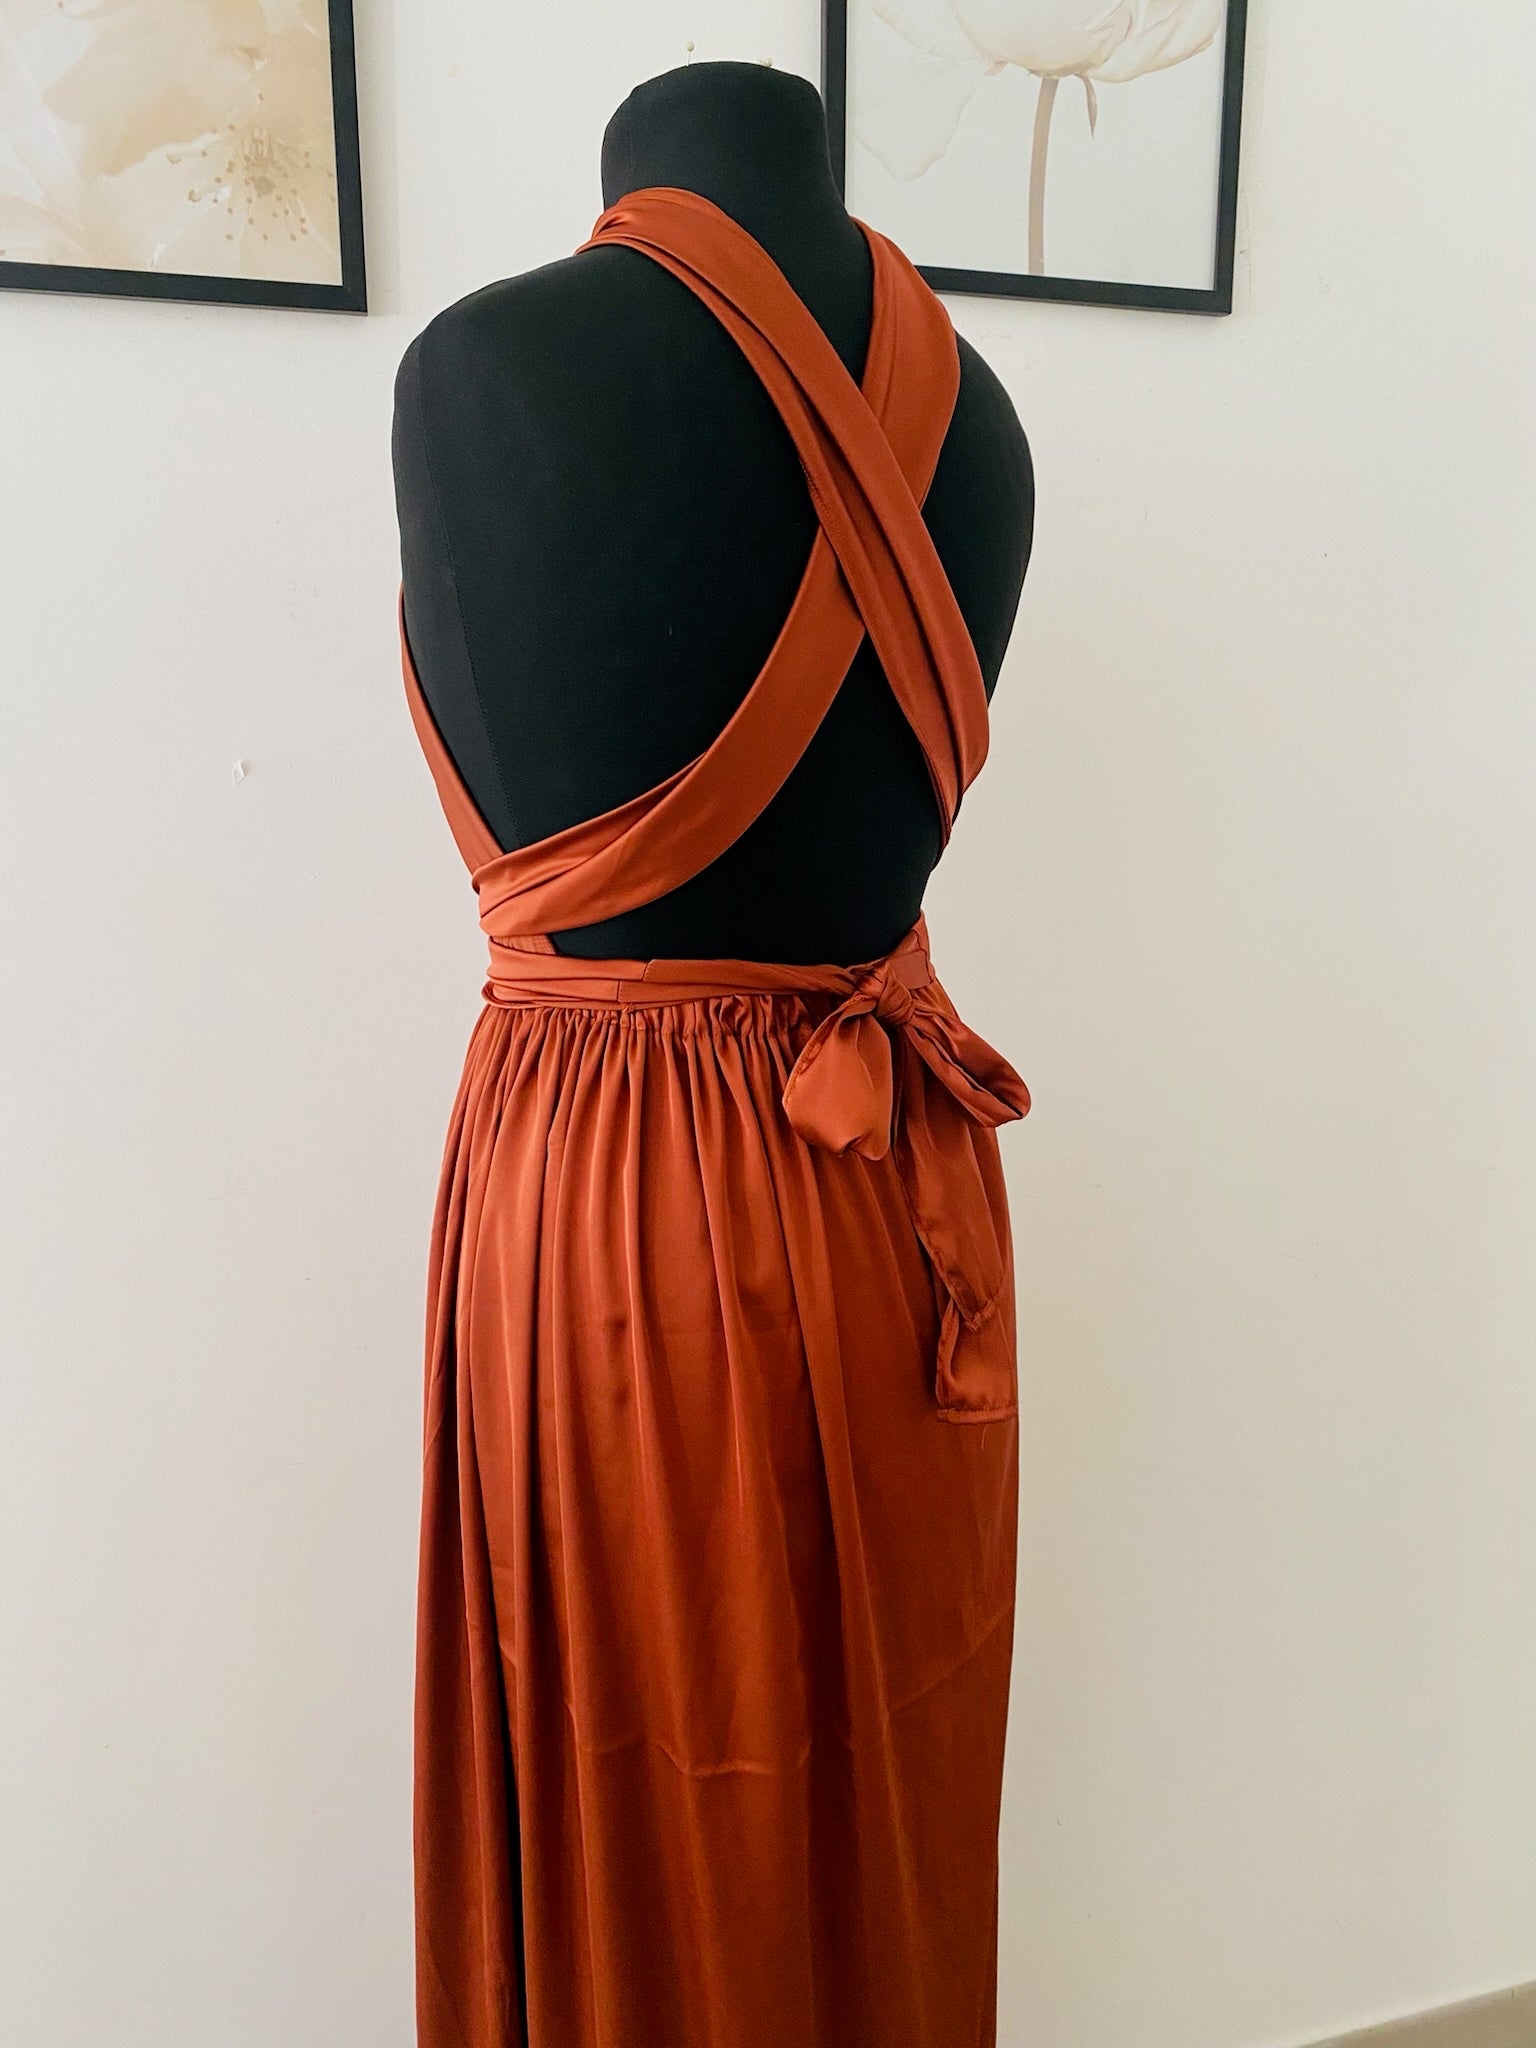 Robe convertible en Satin - Robe de soirée avec poches - Robe Infinity - Choix de couleur - Robe Fendu en satin - Kaysol Couture